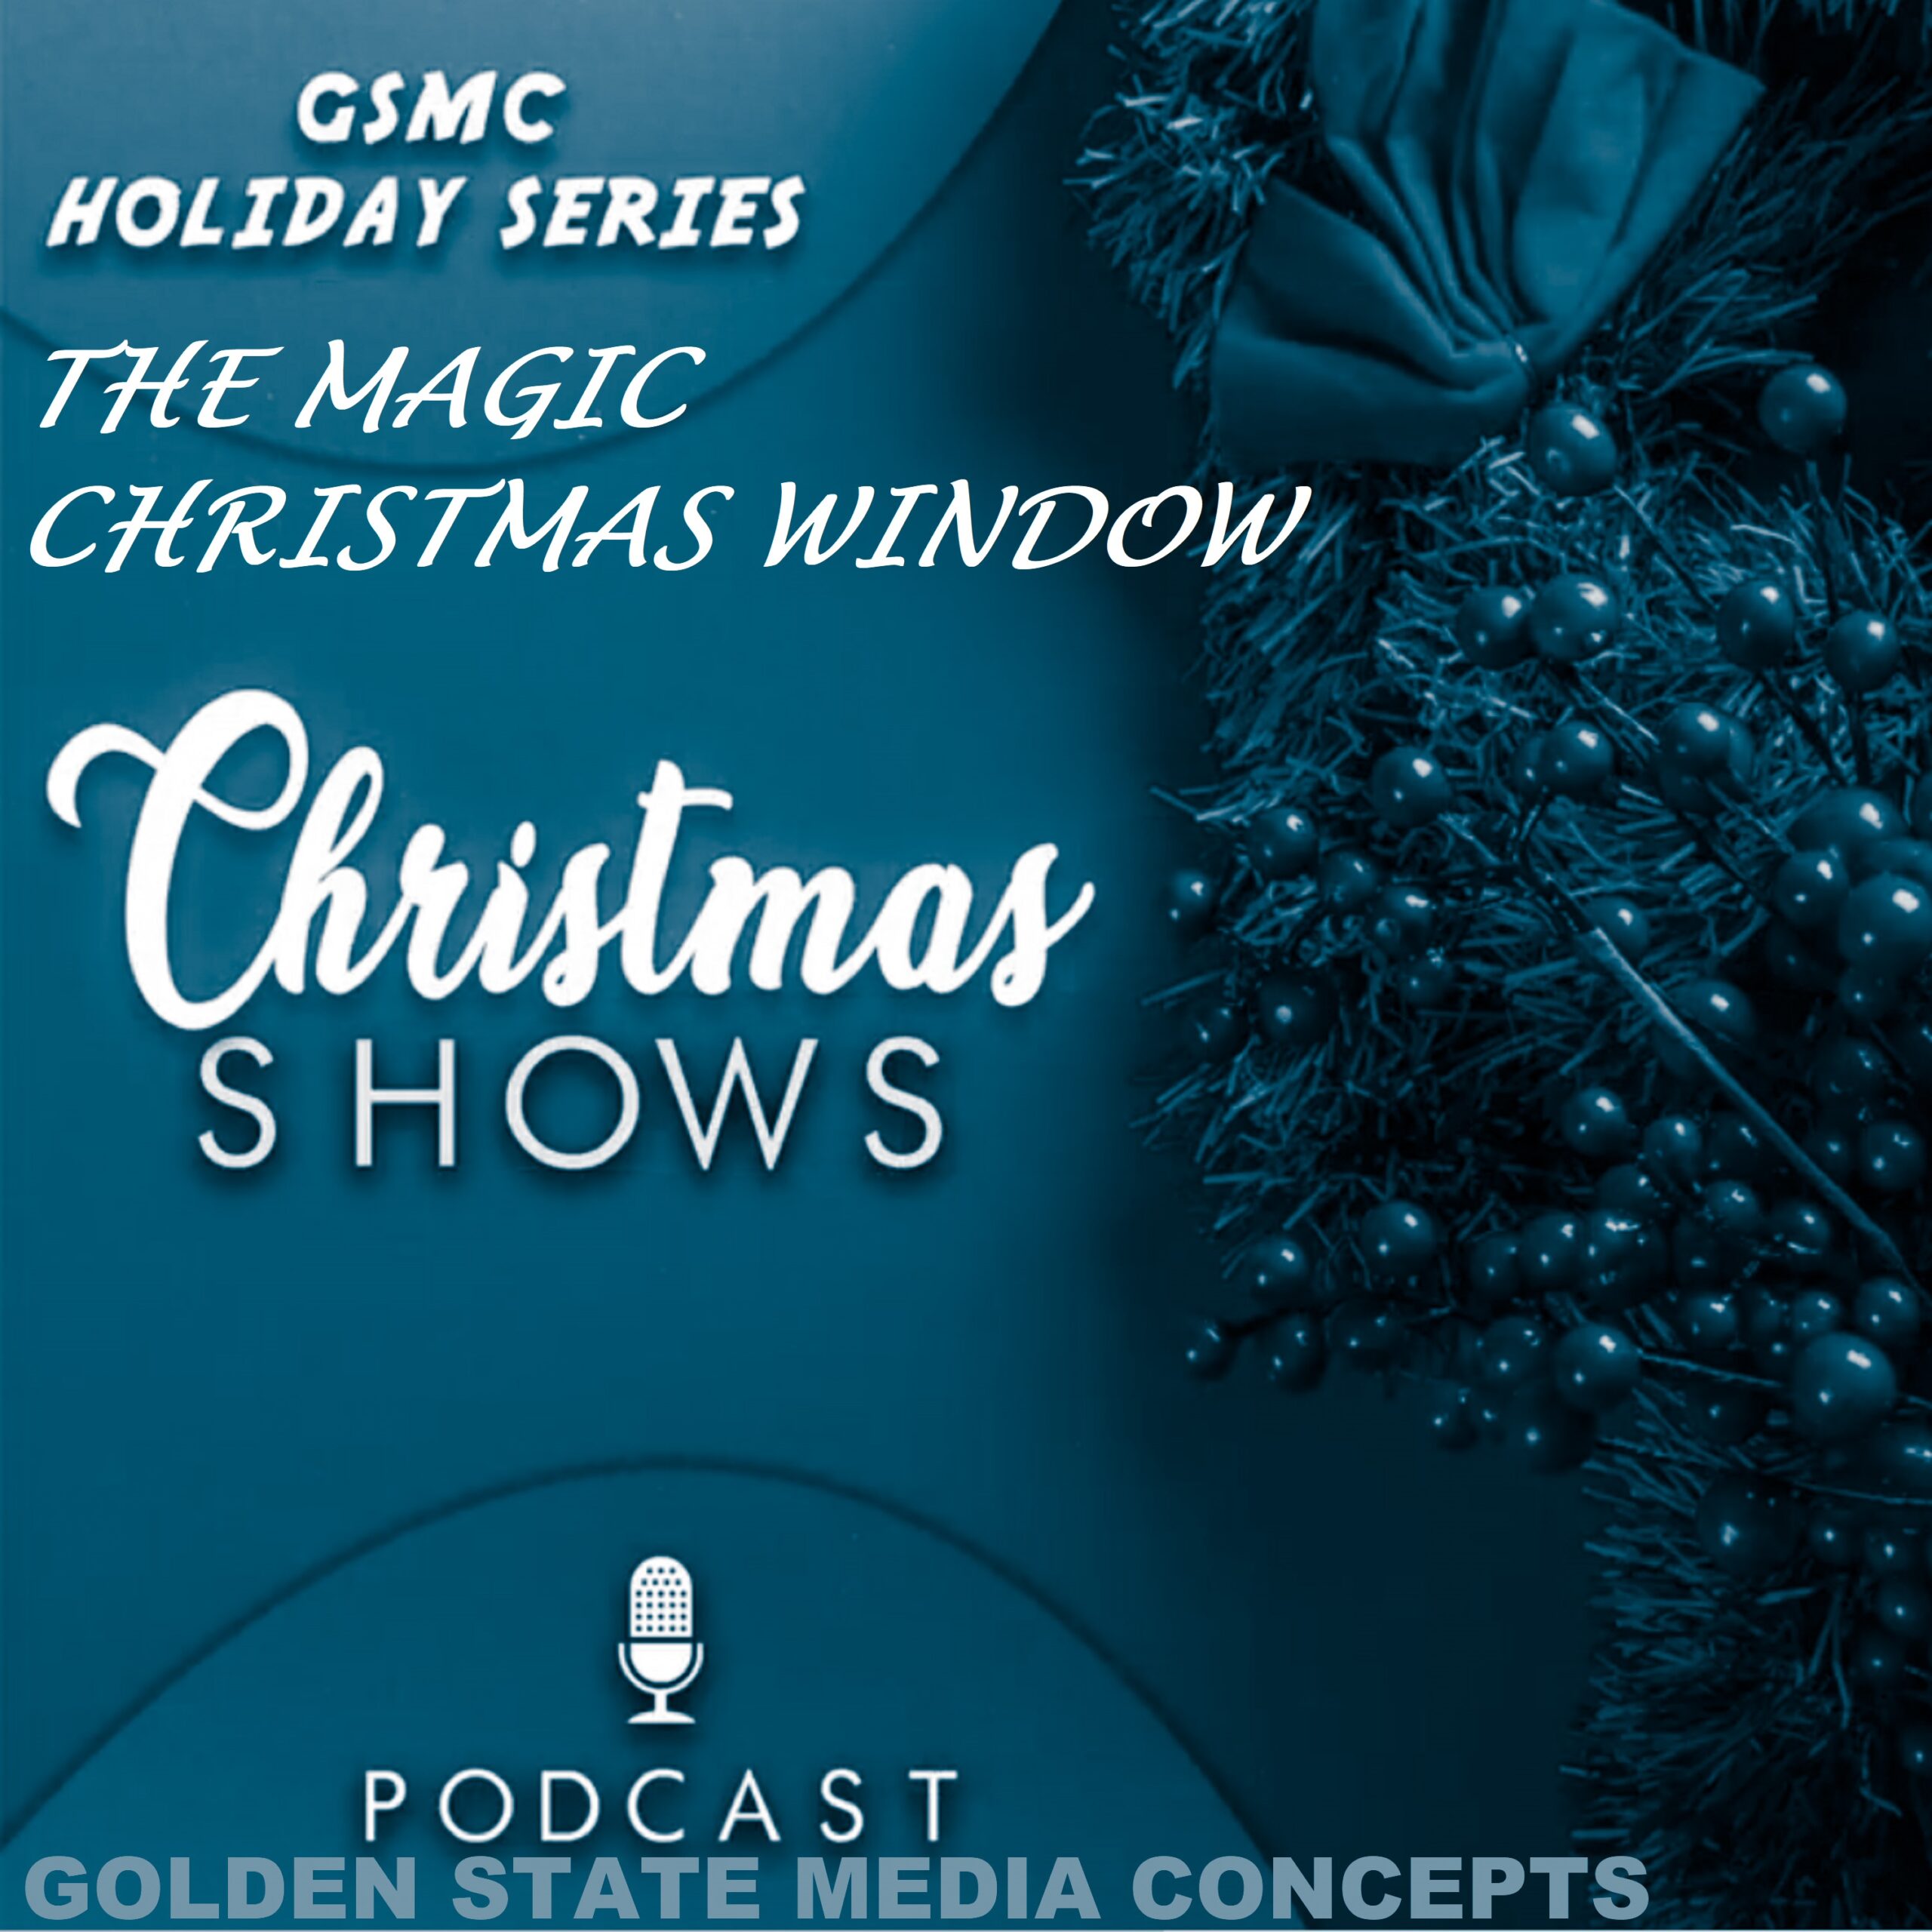 GSMC Holiday Series: The Magic Christmas Window